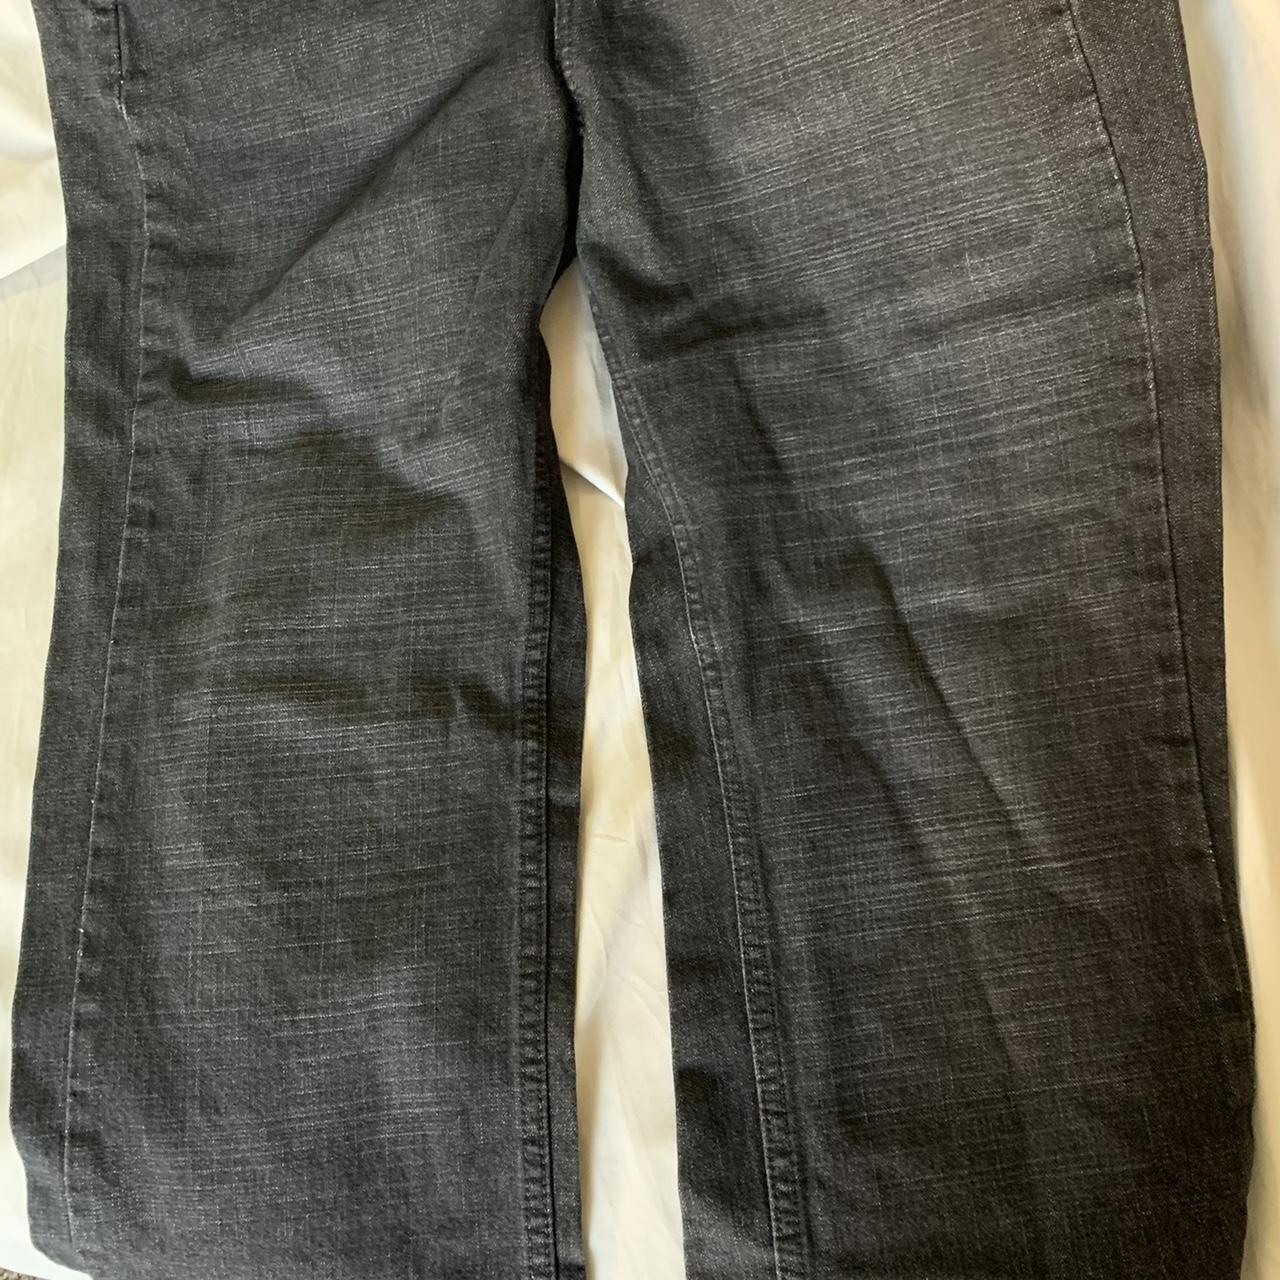 Black lee Riveted jeans black straight leg... - Depop